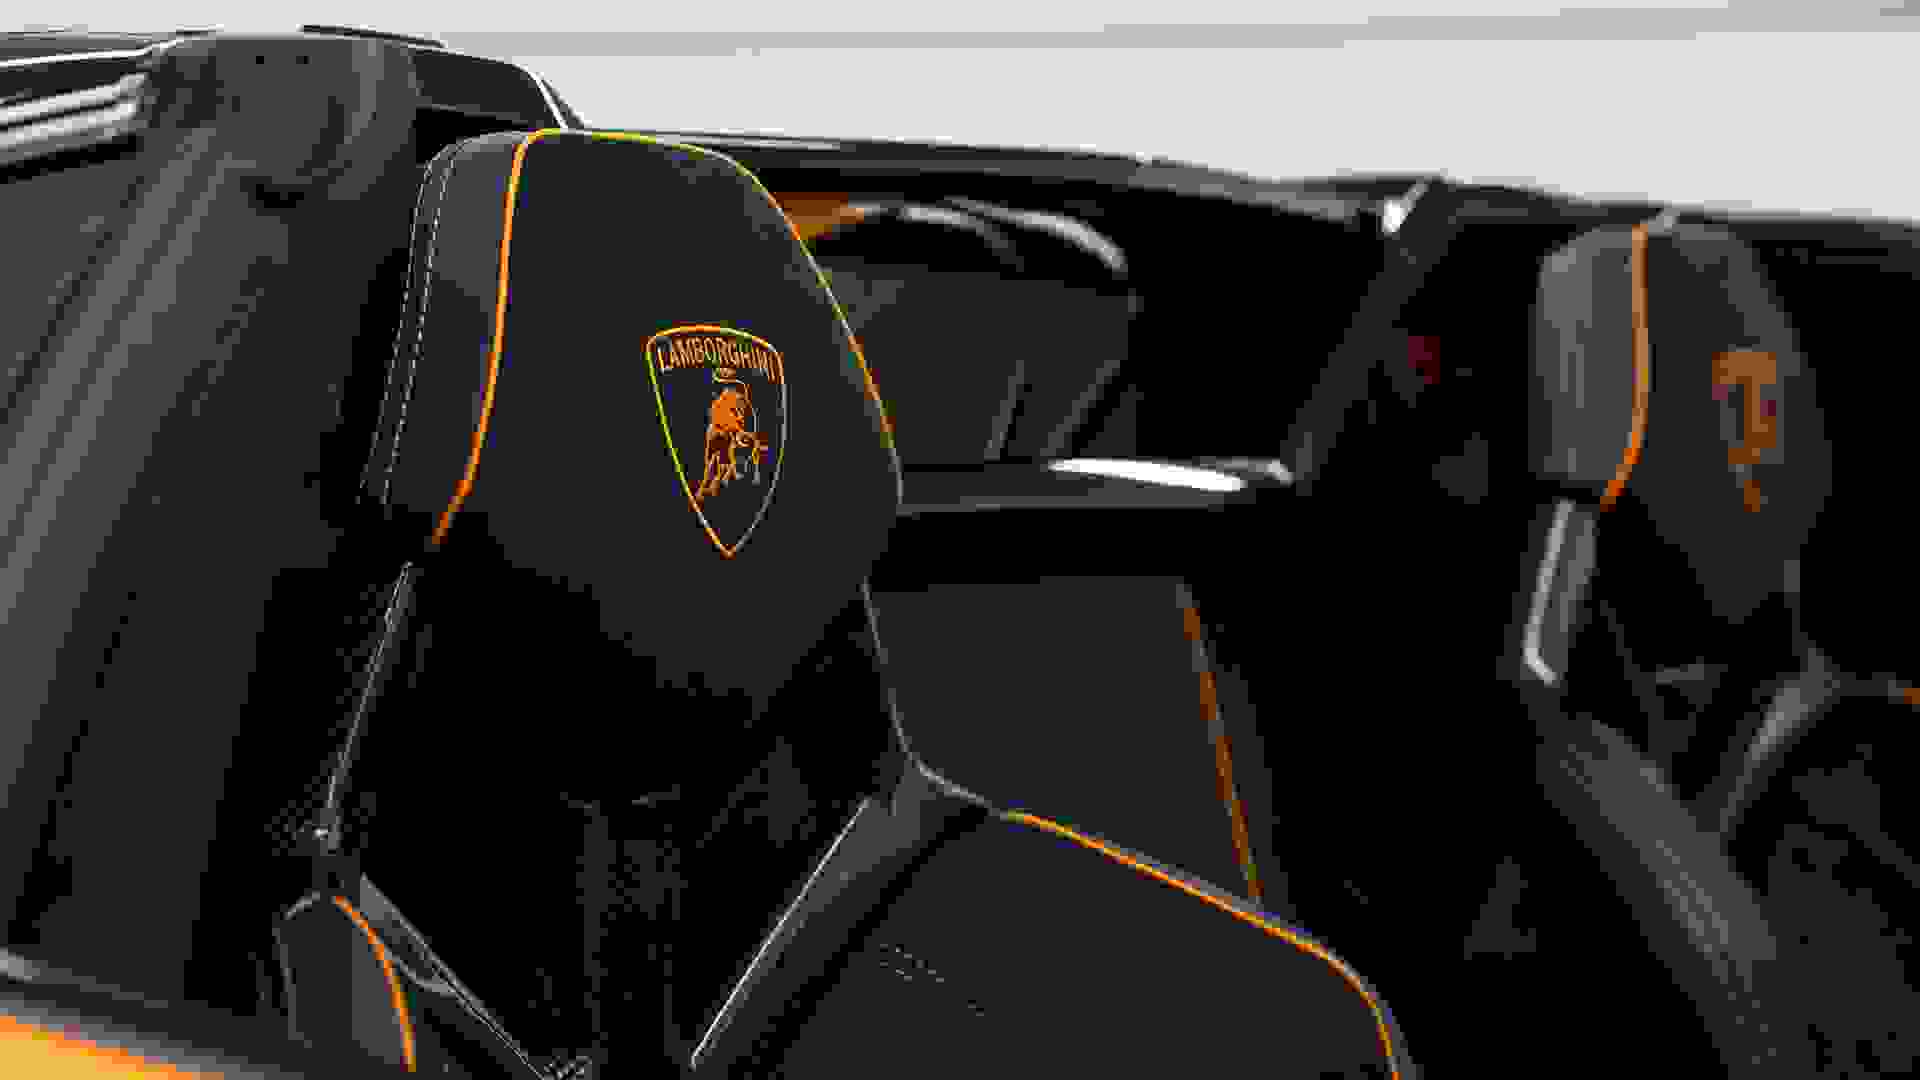 Lamborghini AVENTADOR SV Photo e68b874f-c9a2-4549-9bae-96a4b8bbe64d.jpg